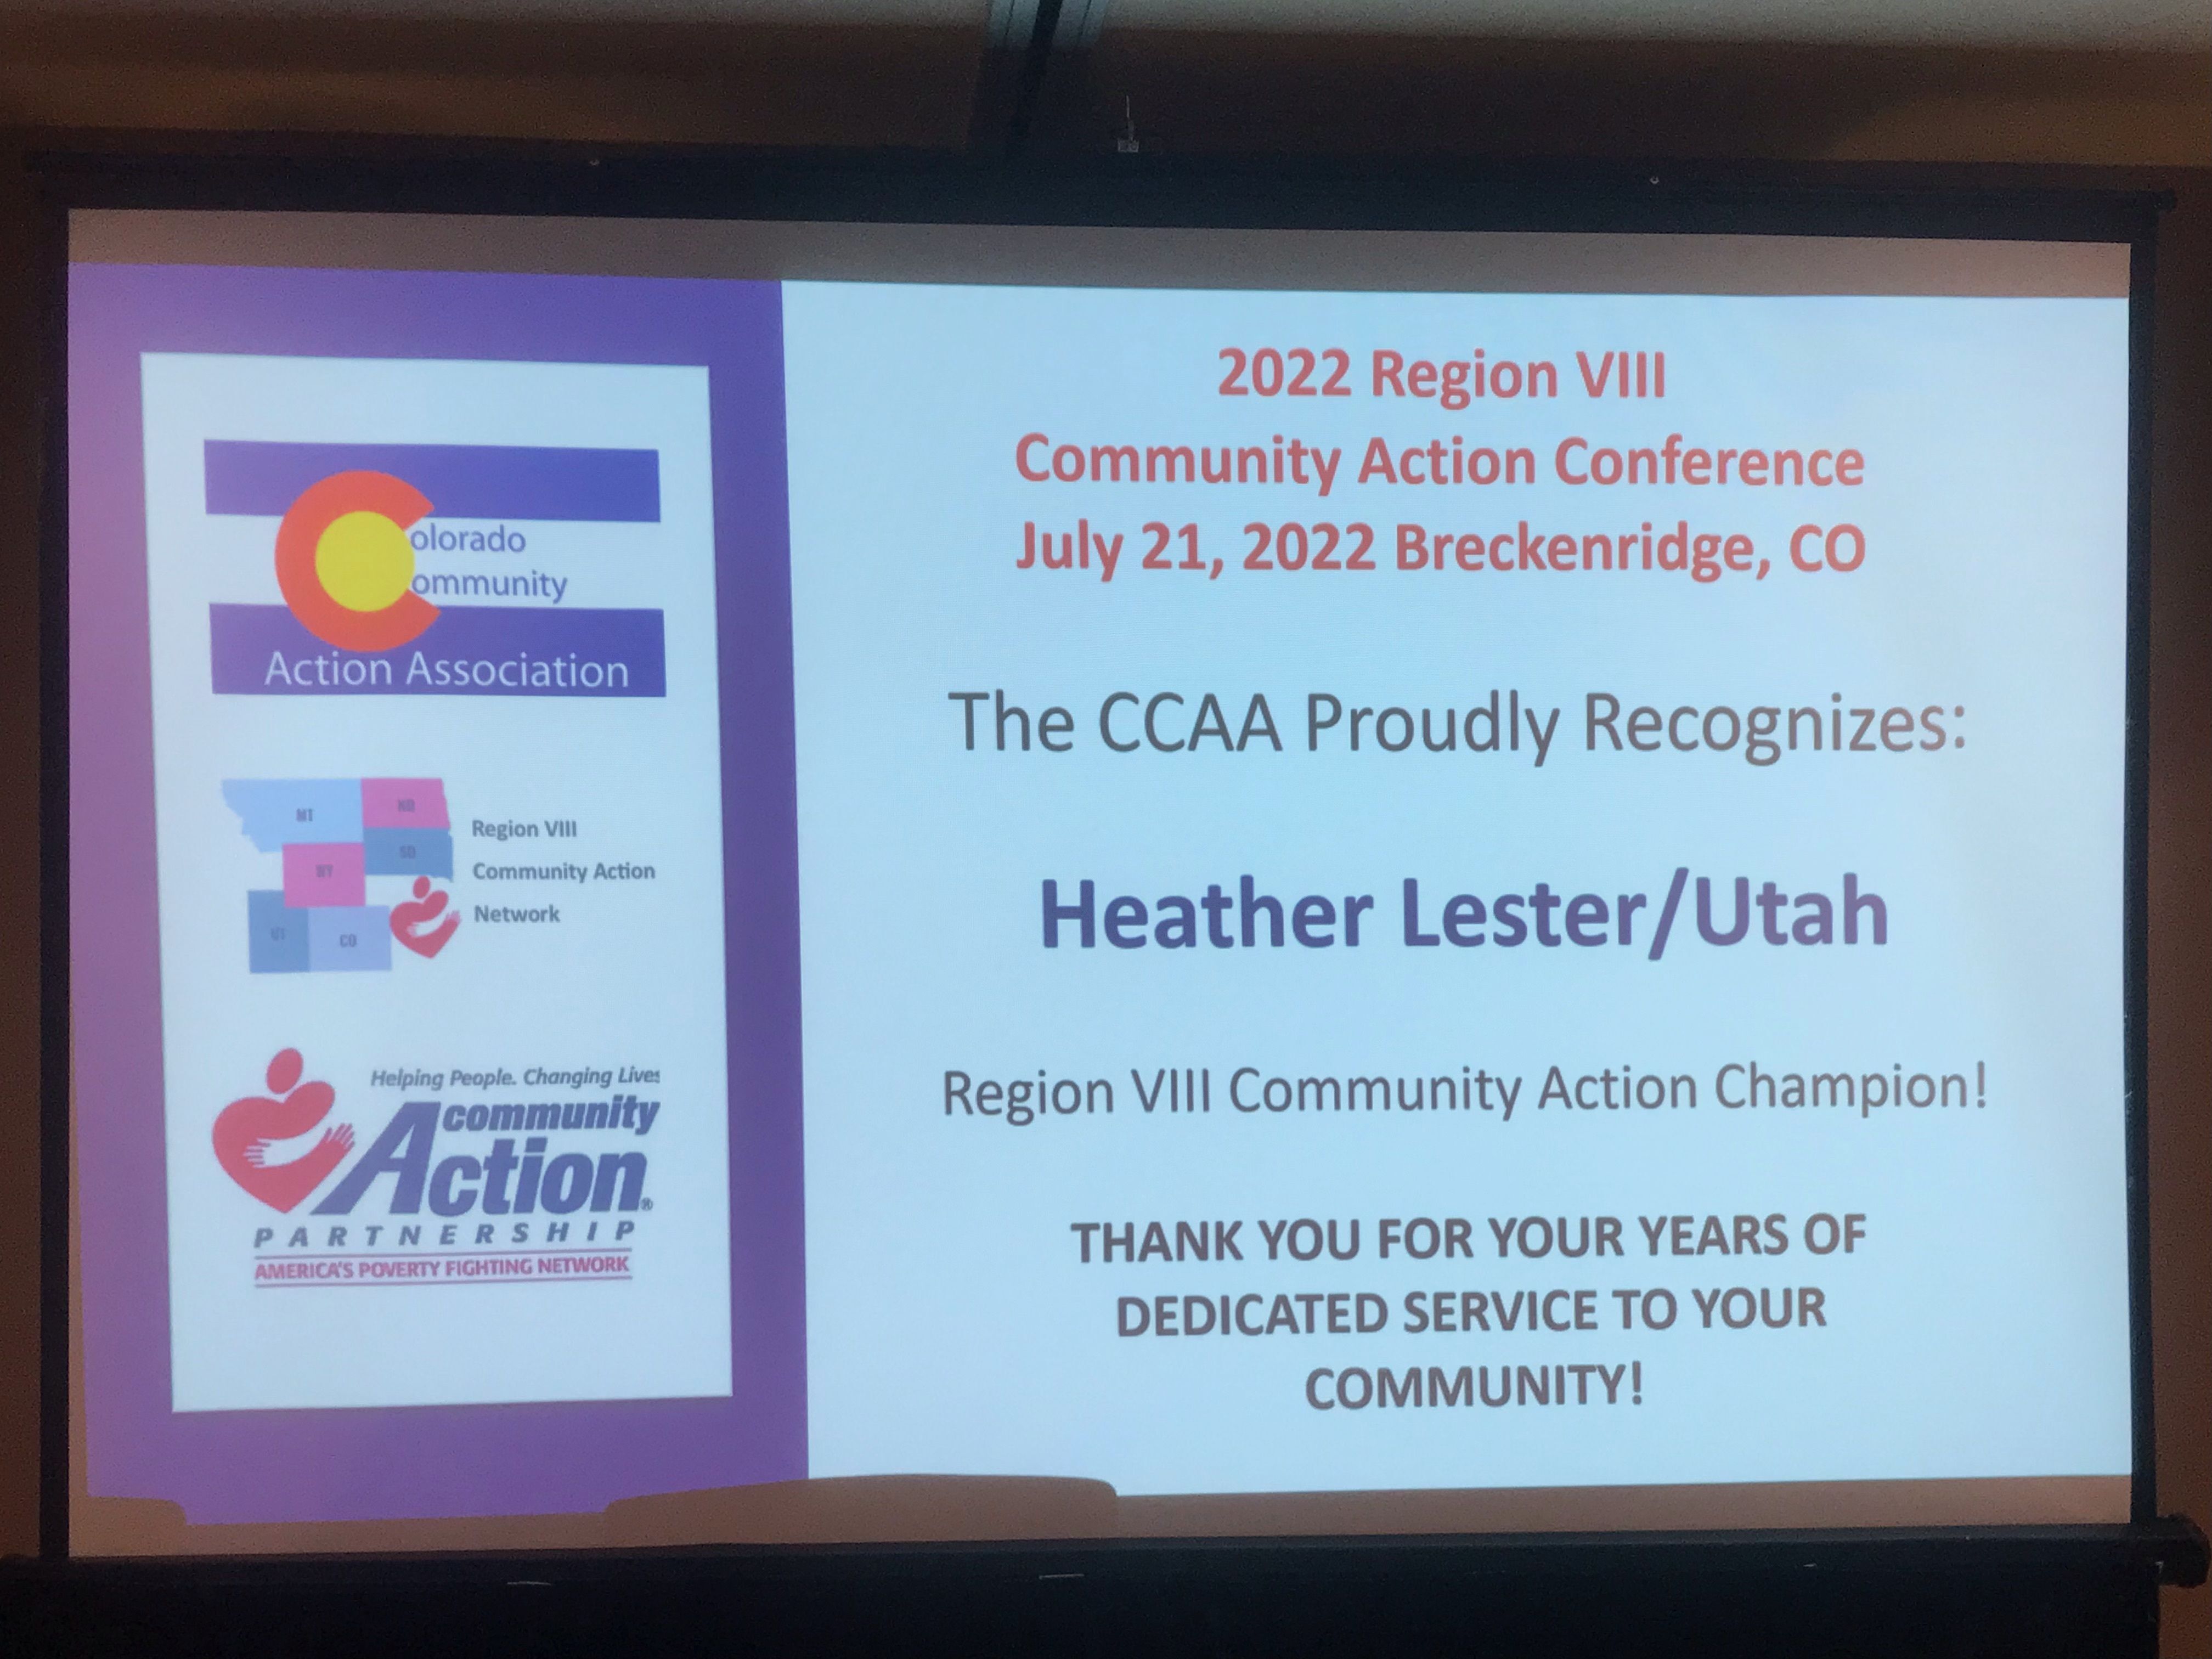 Heather Lester Named Region 8 Community Action Chamption!